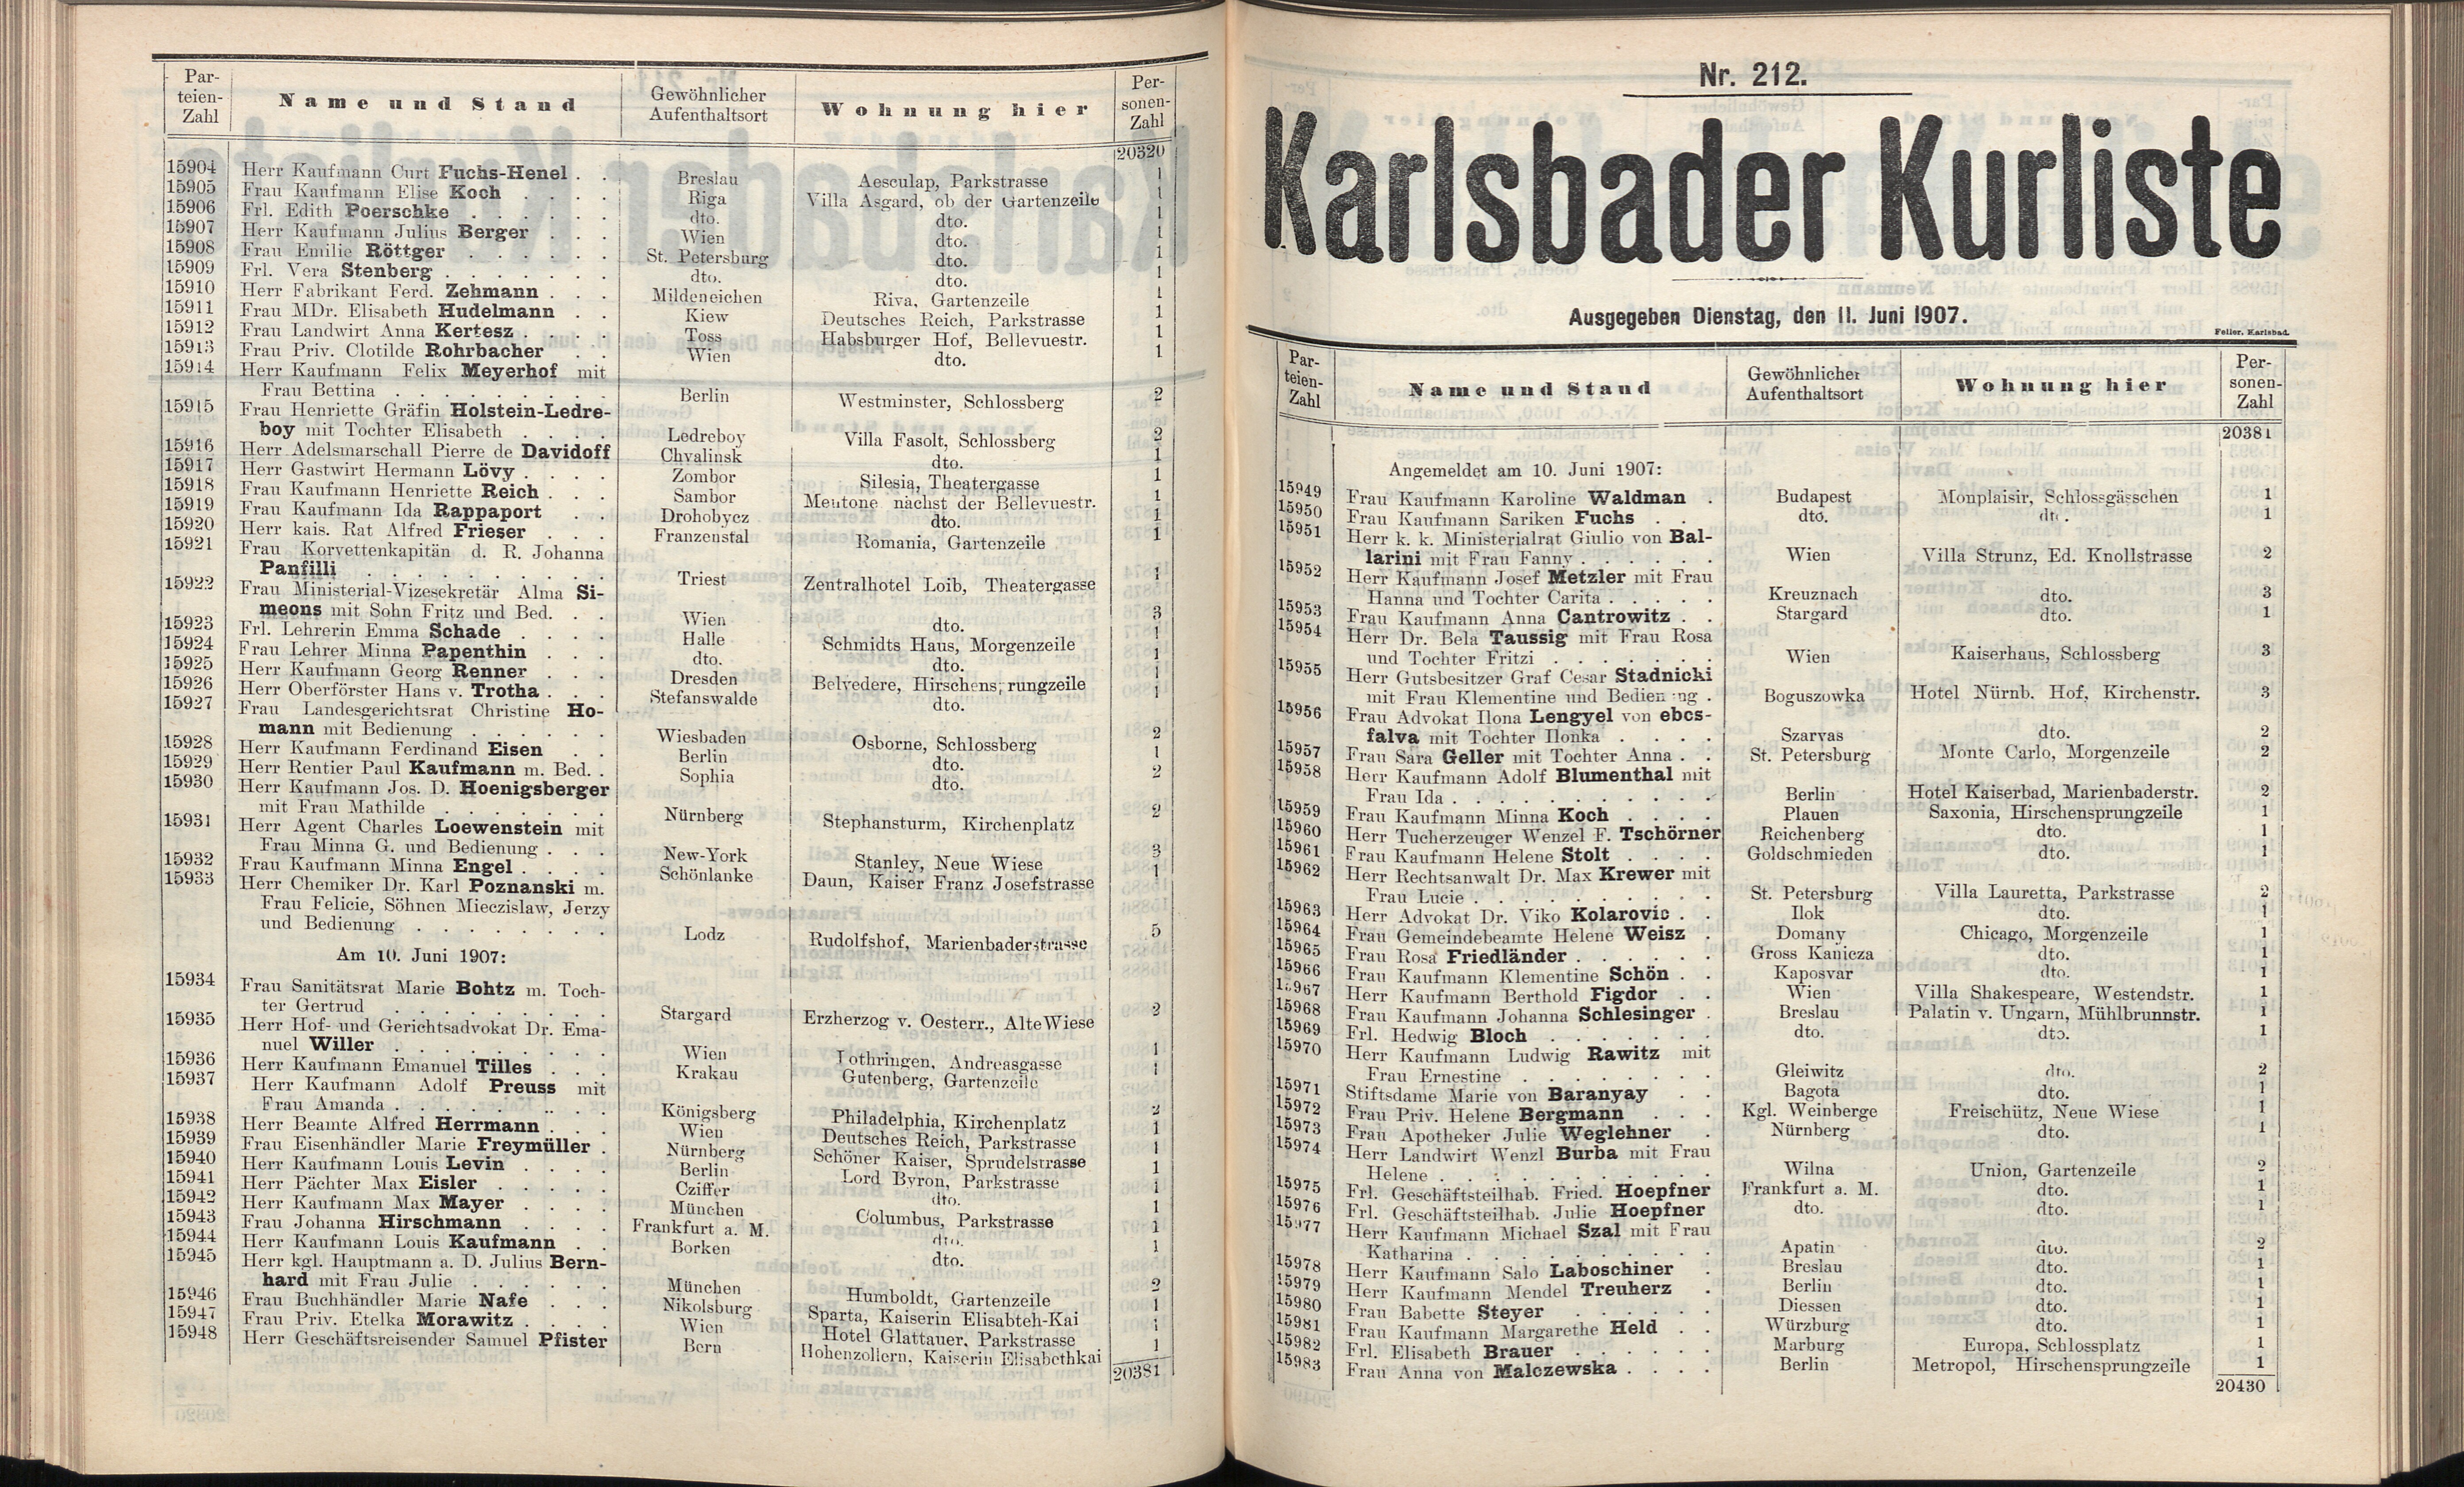 325. soap-kv_knihovna_karlsbader-kurliste-1907_3260